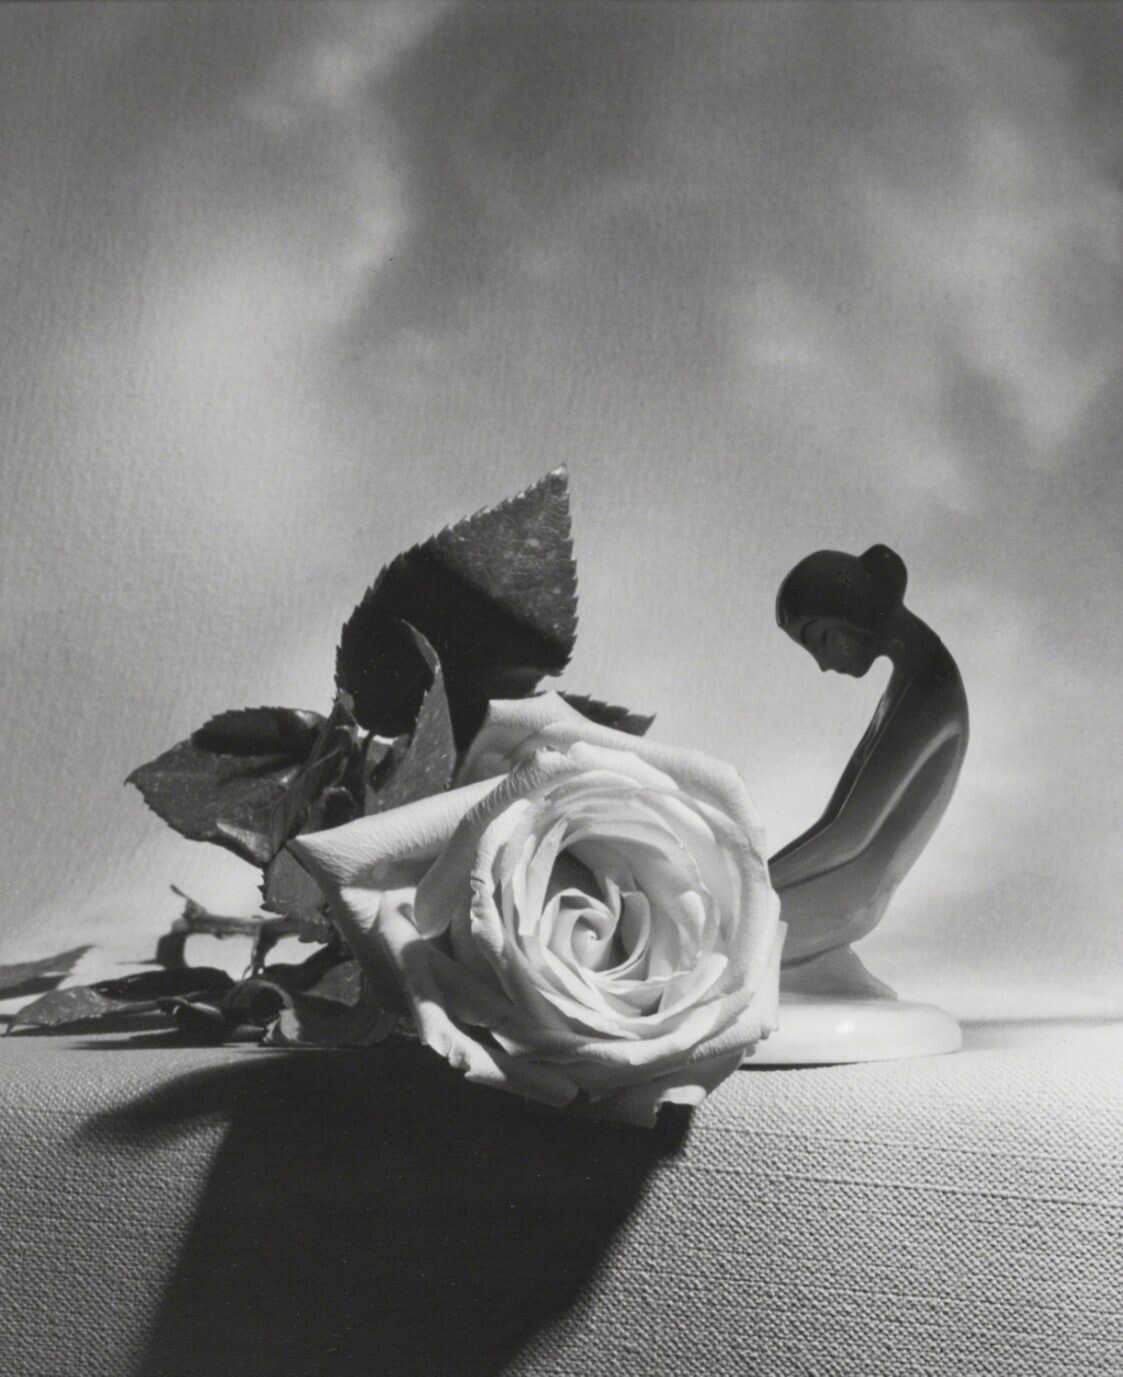 Ева с розой, 1988. Фотограф Хорст П. Хорст